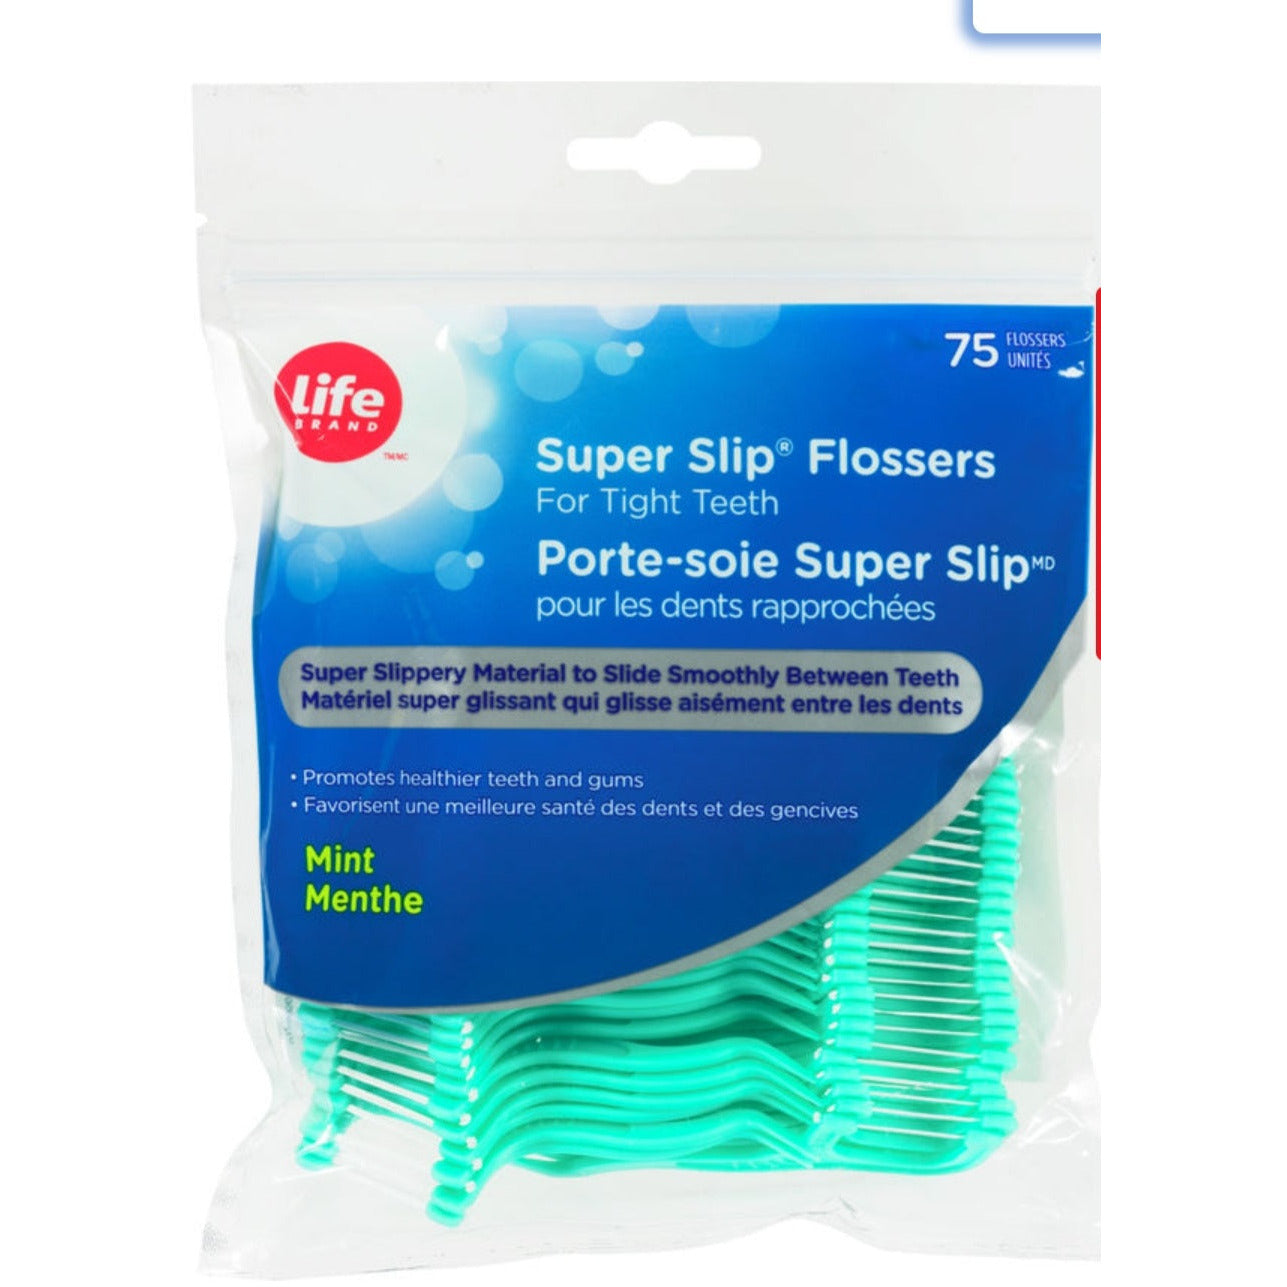 Life Super Slip thread holder for tight teeth 75 ea